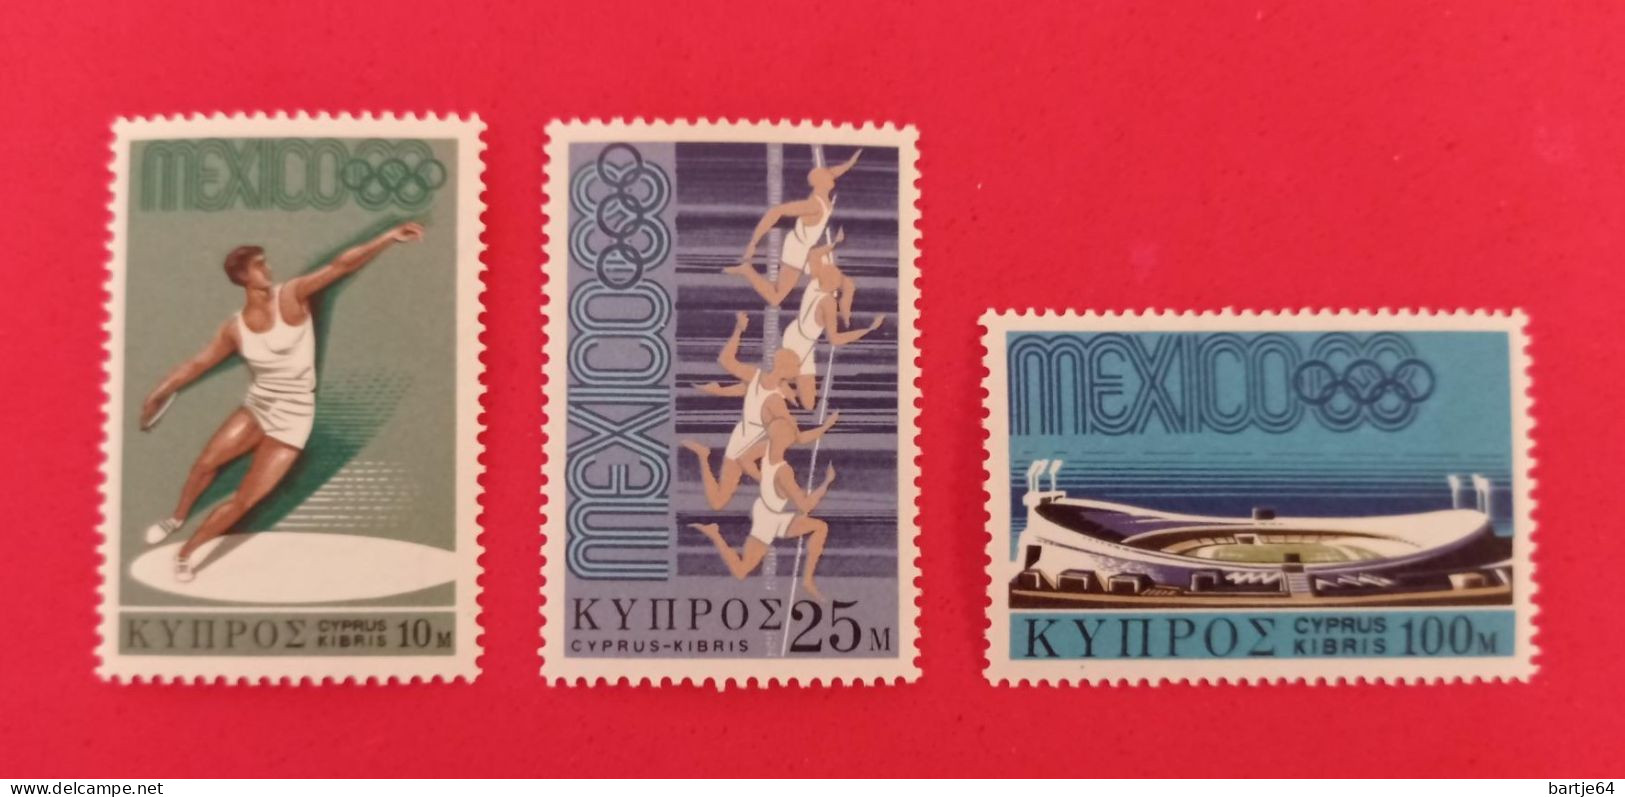 1968 Cyprus Islands - Serie MNH - Estate 1968: Messico